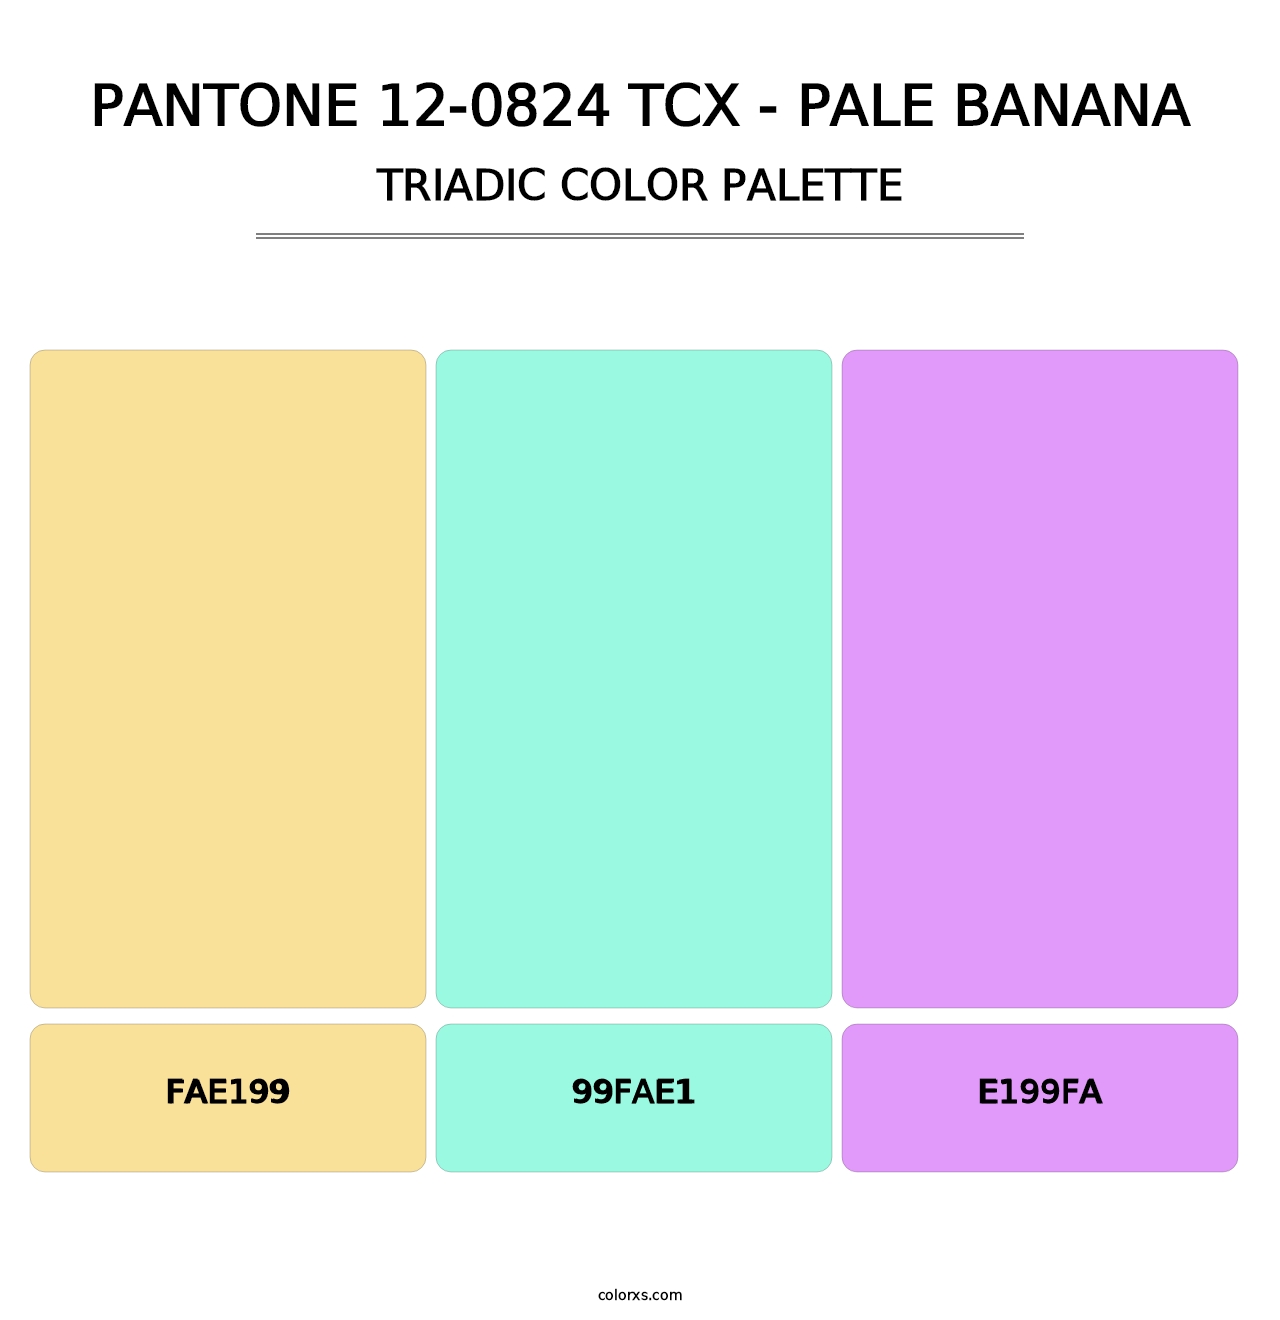 PANTONE 12-0824 TCX - Pale Banana - Triadic Color Palette